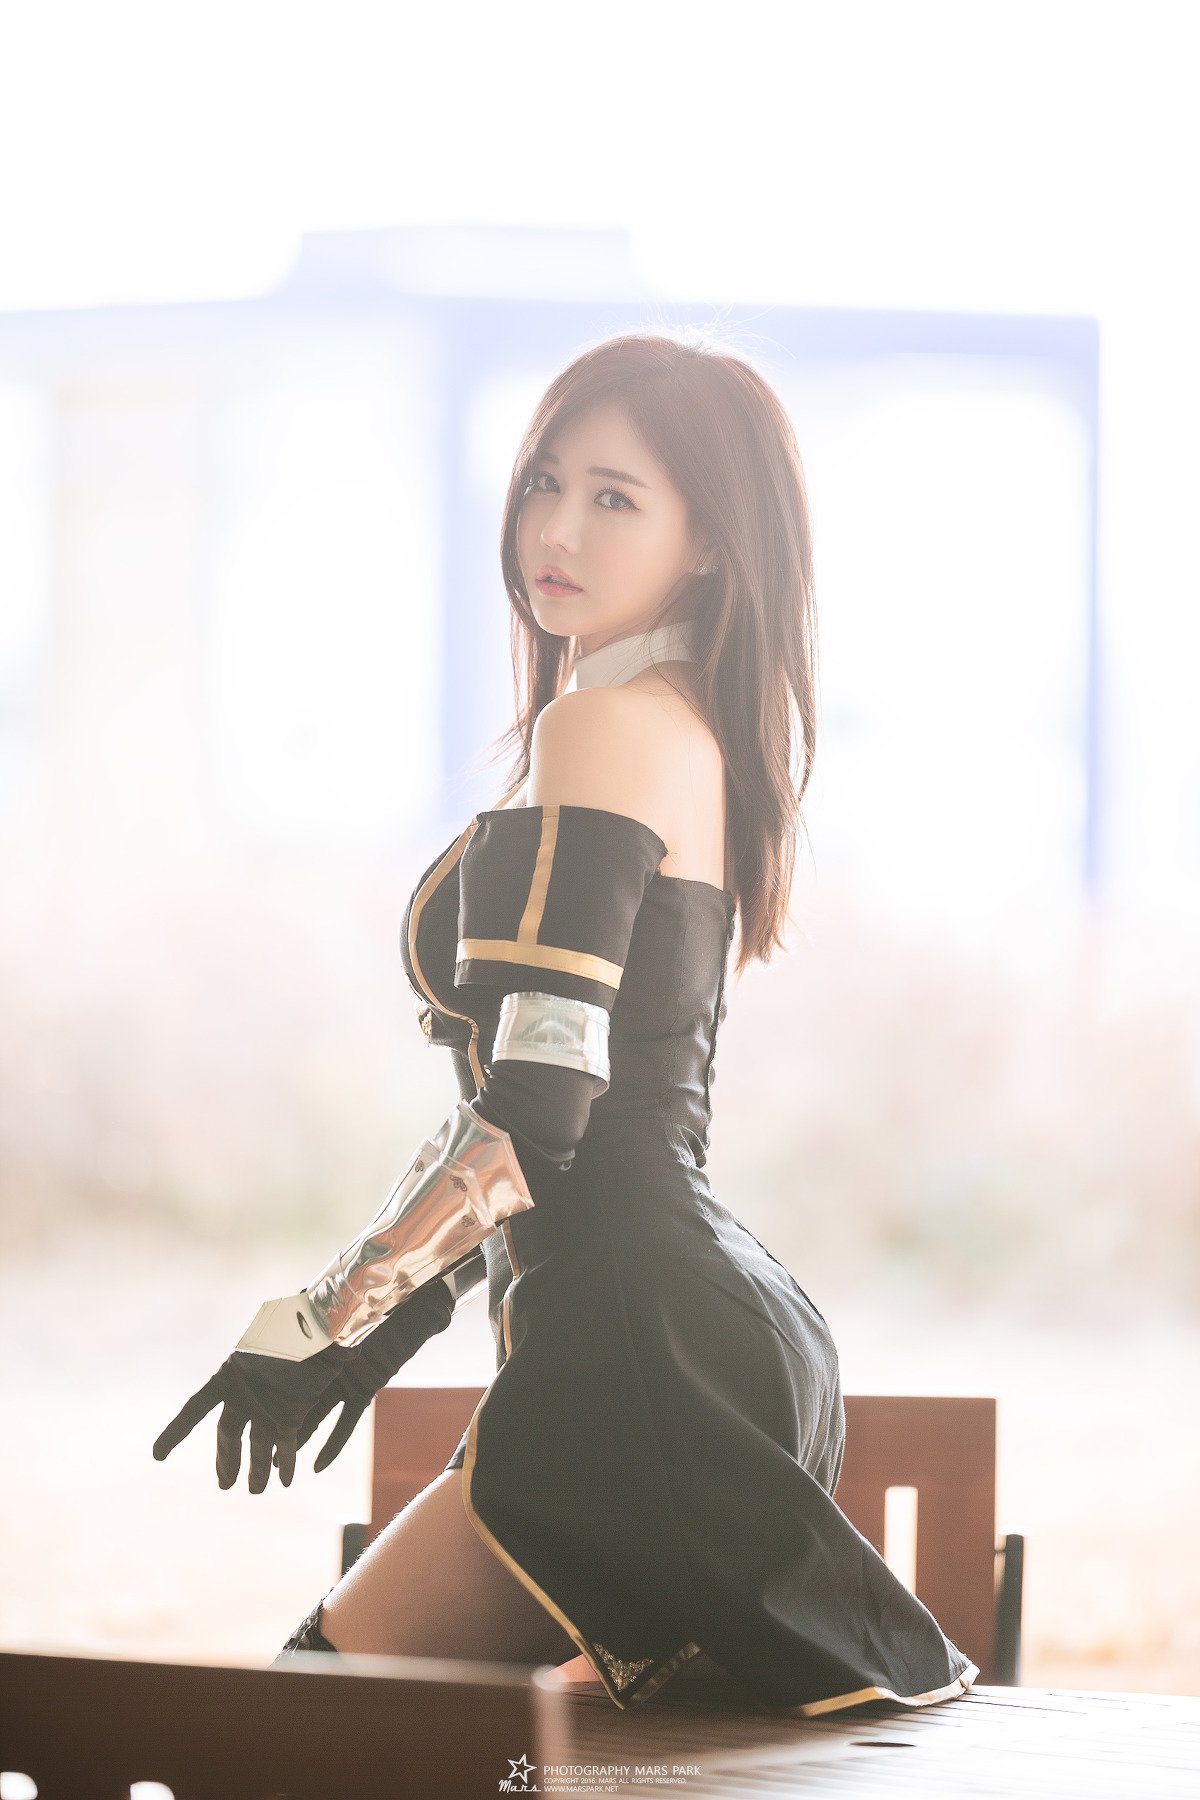 Han Ga Eun Hot Cosplay Picture and Photo